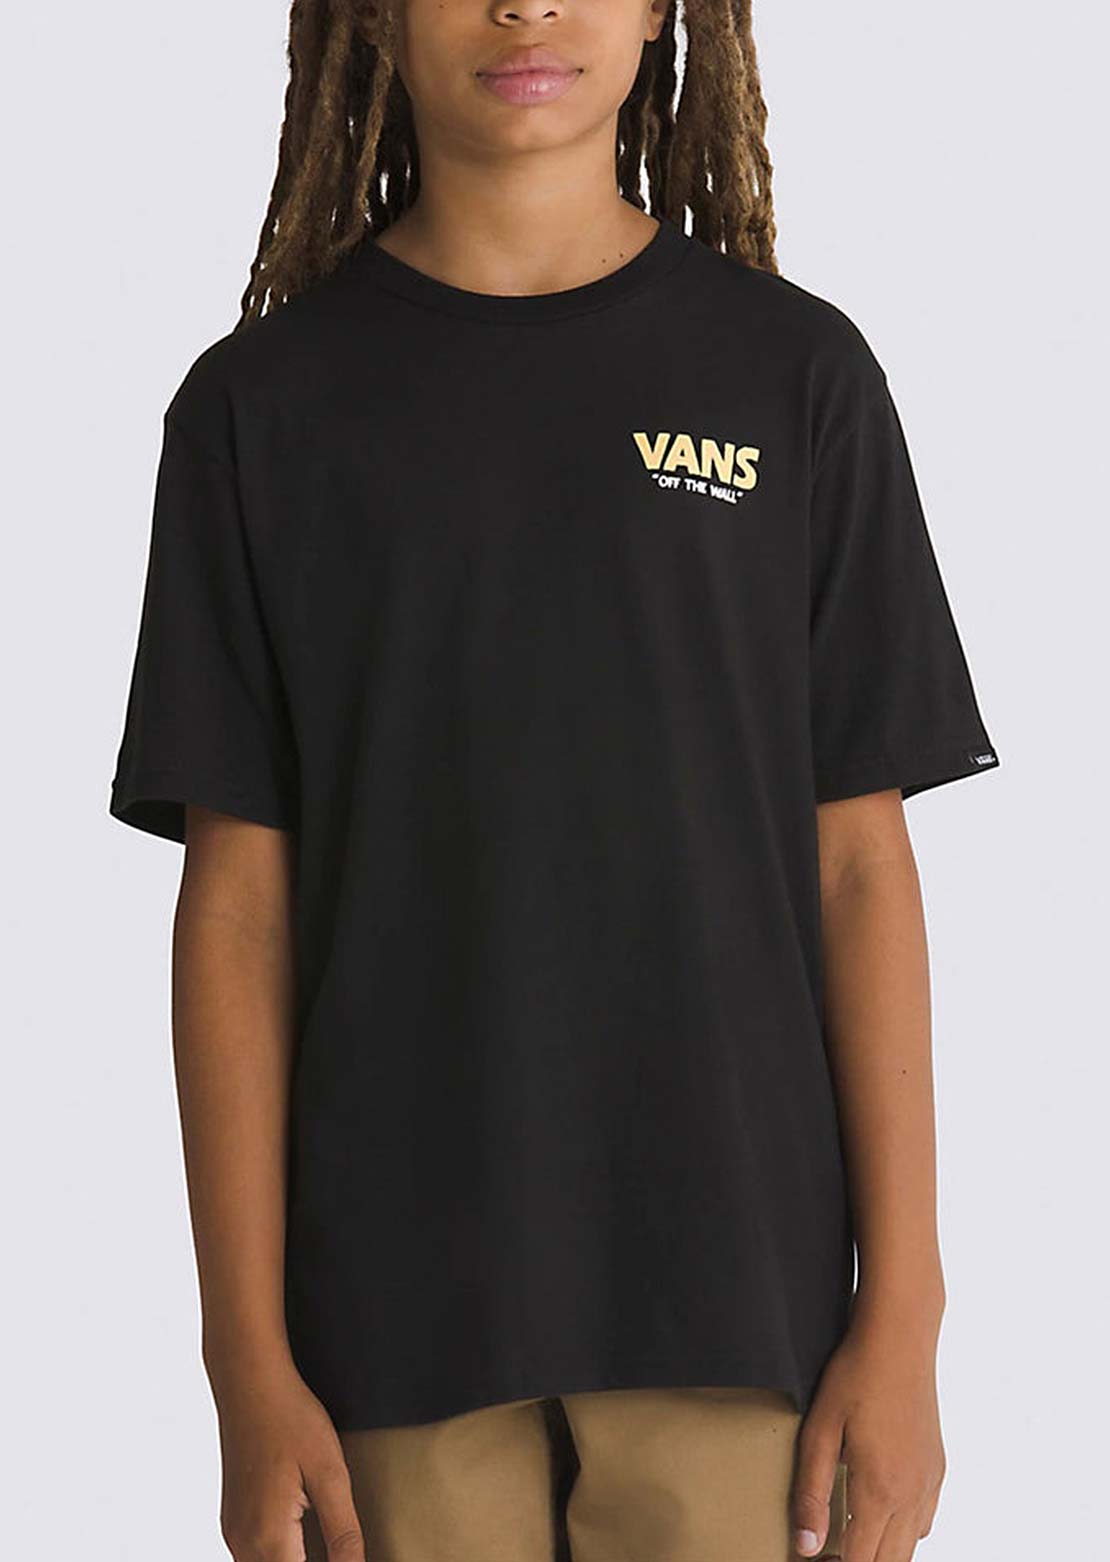 Vans Junior Permanent Vacation T-Shirt Black